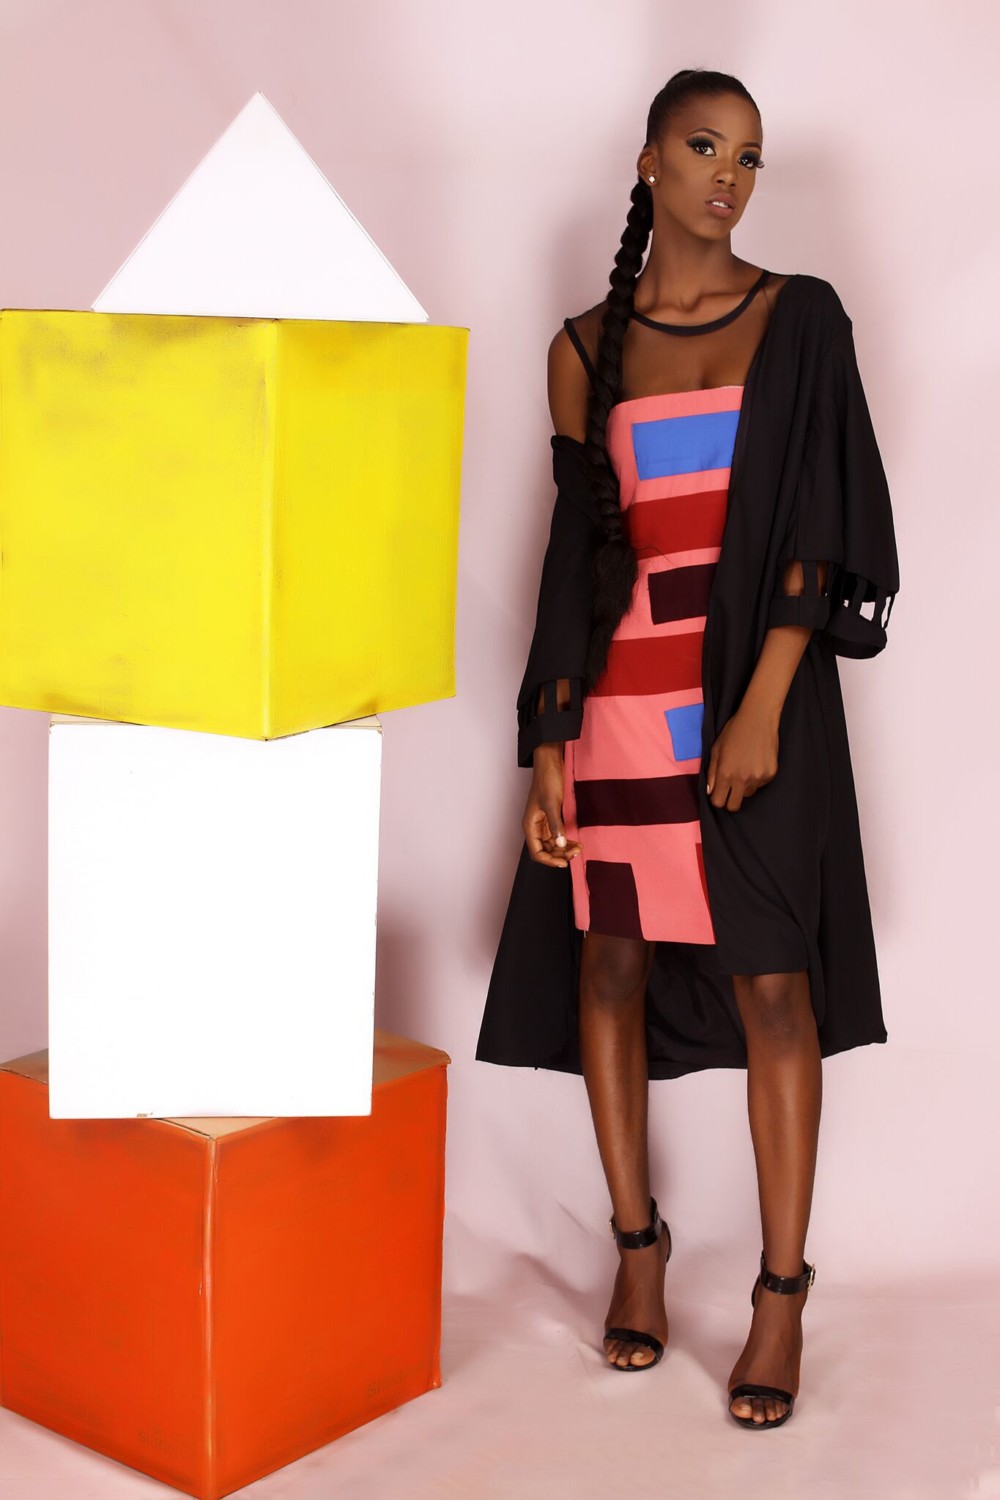 Nigerian Fashion Brand CeCe launches its Latest Lookbook titled 'Kandinsky'